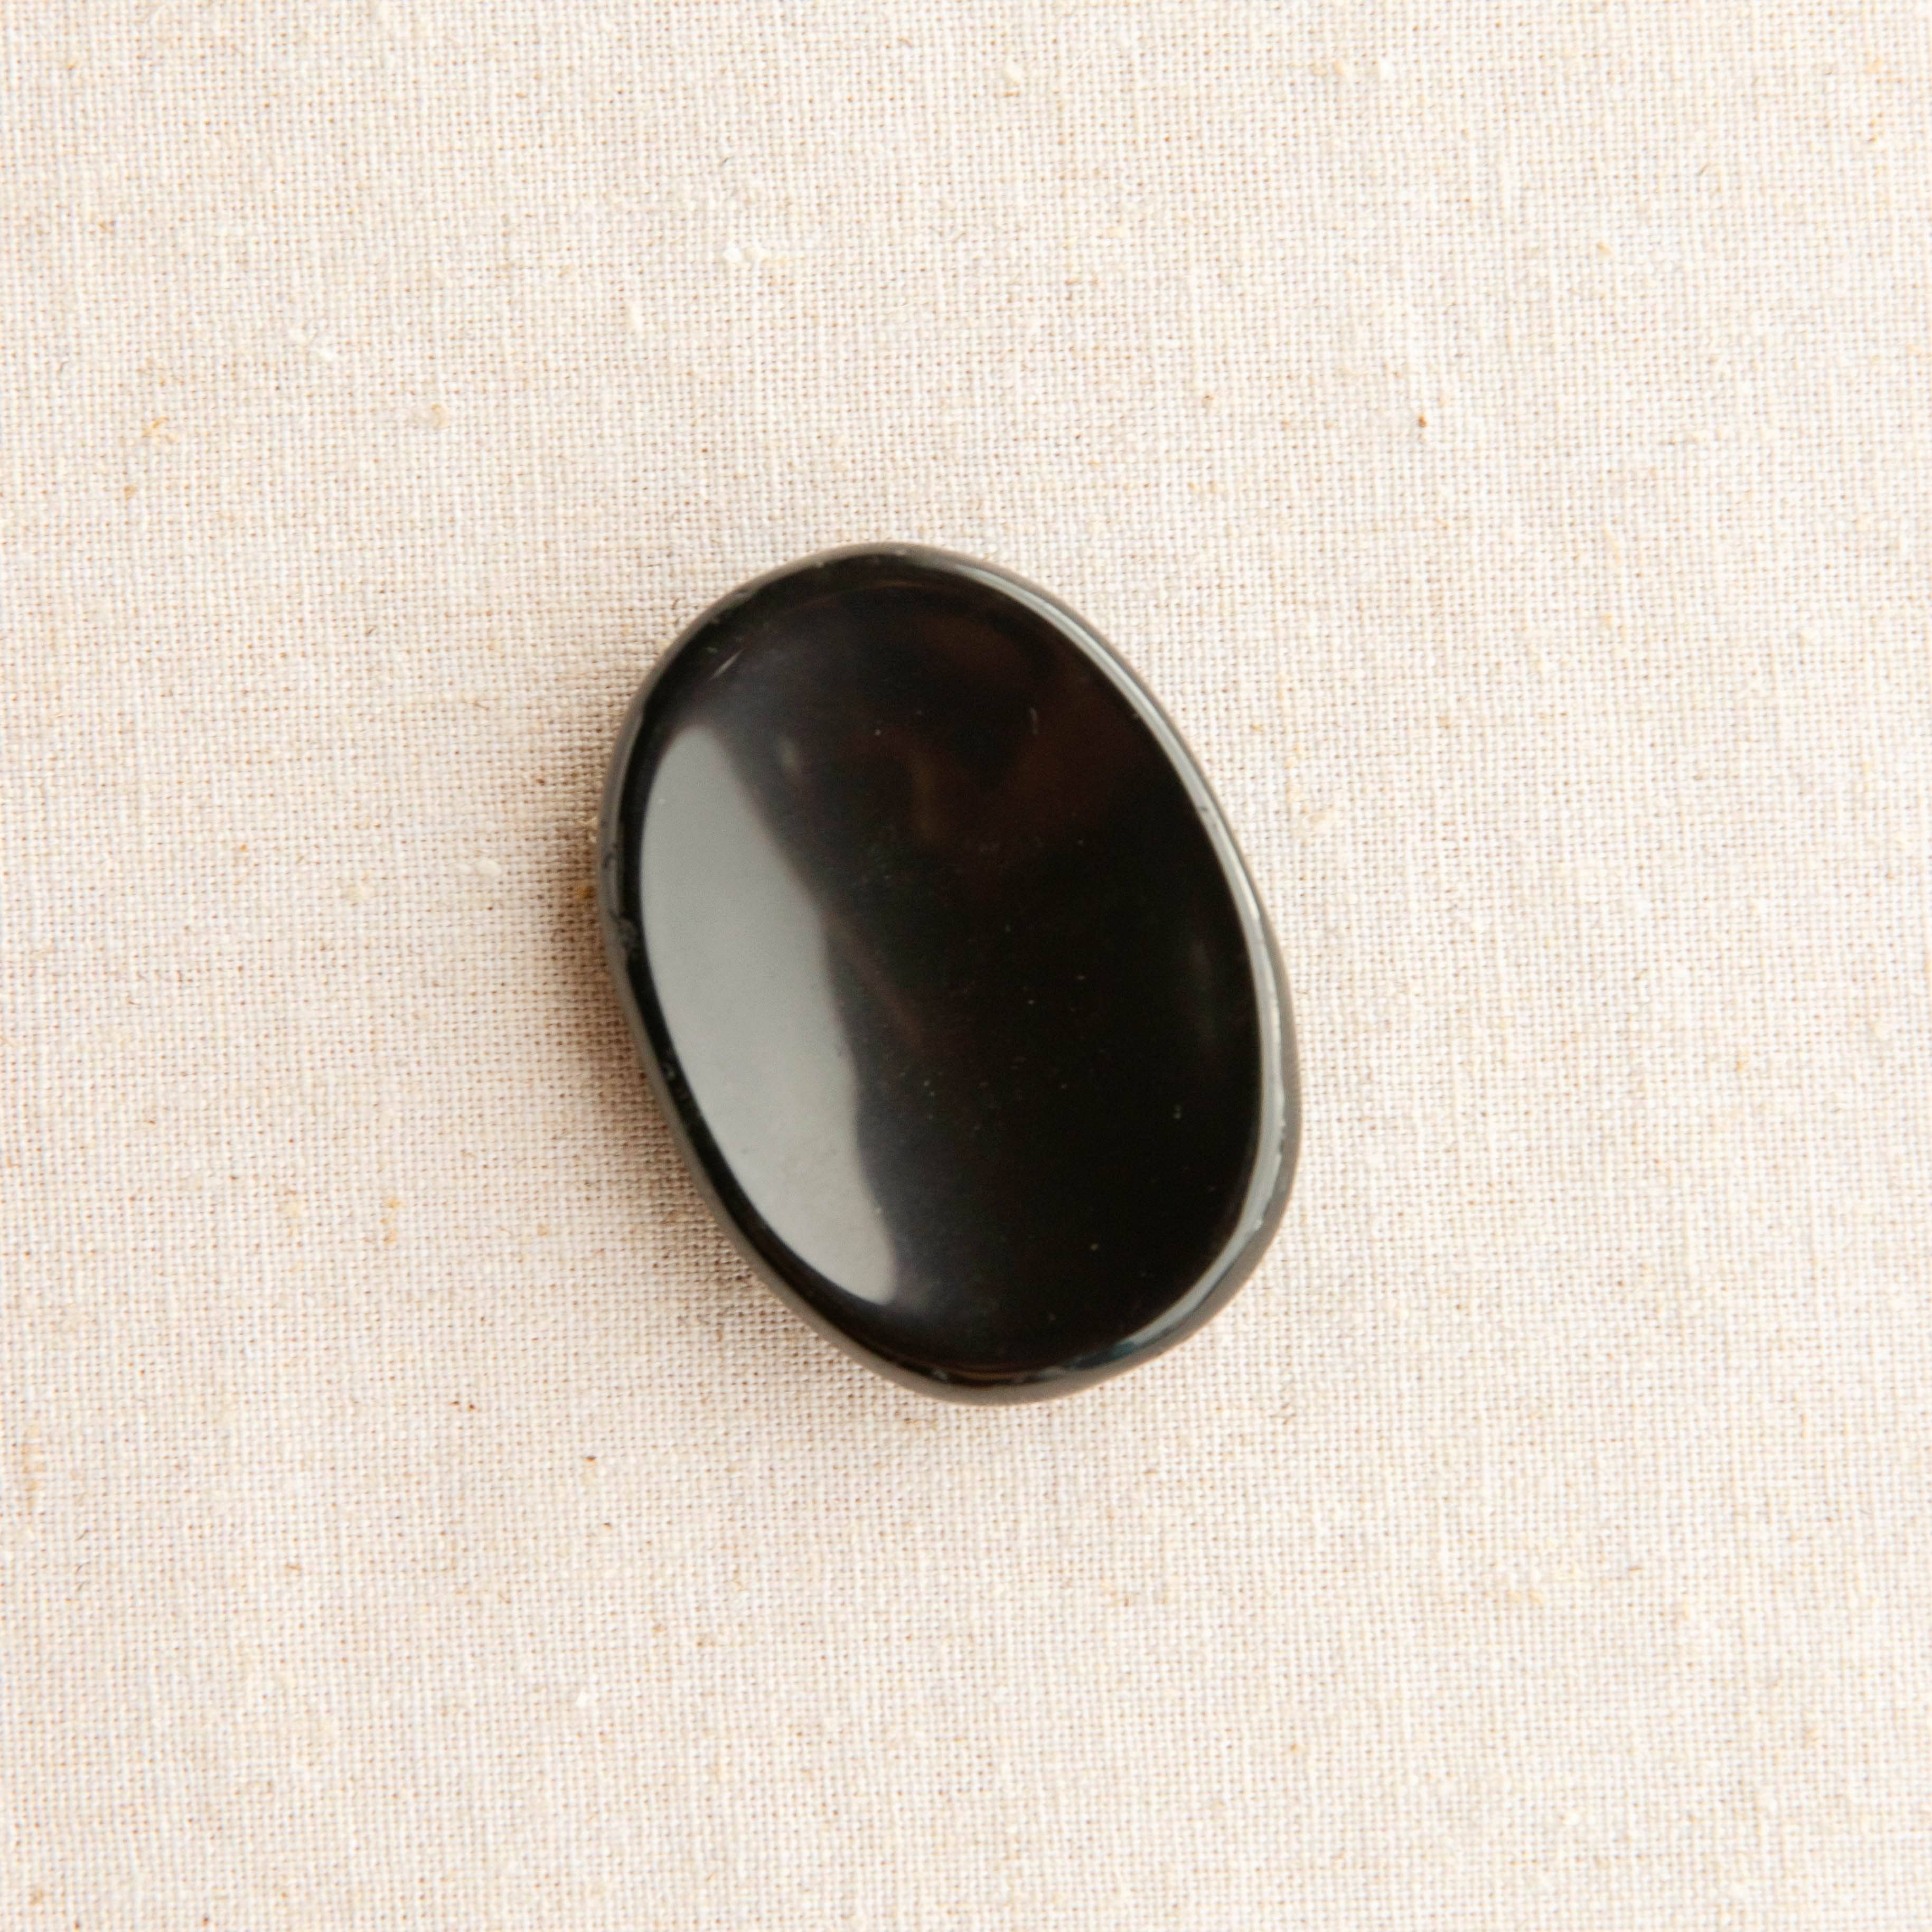  Black Obsidian Worry Stone by Tiny Rituals Tiny Rituals Perfumarie